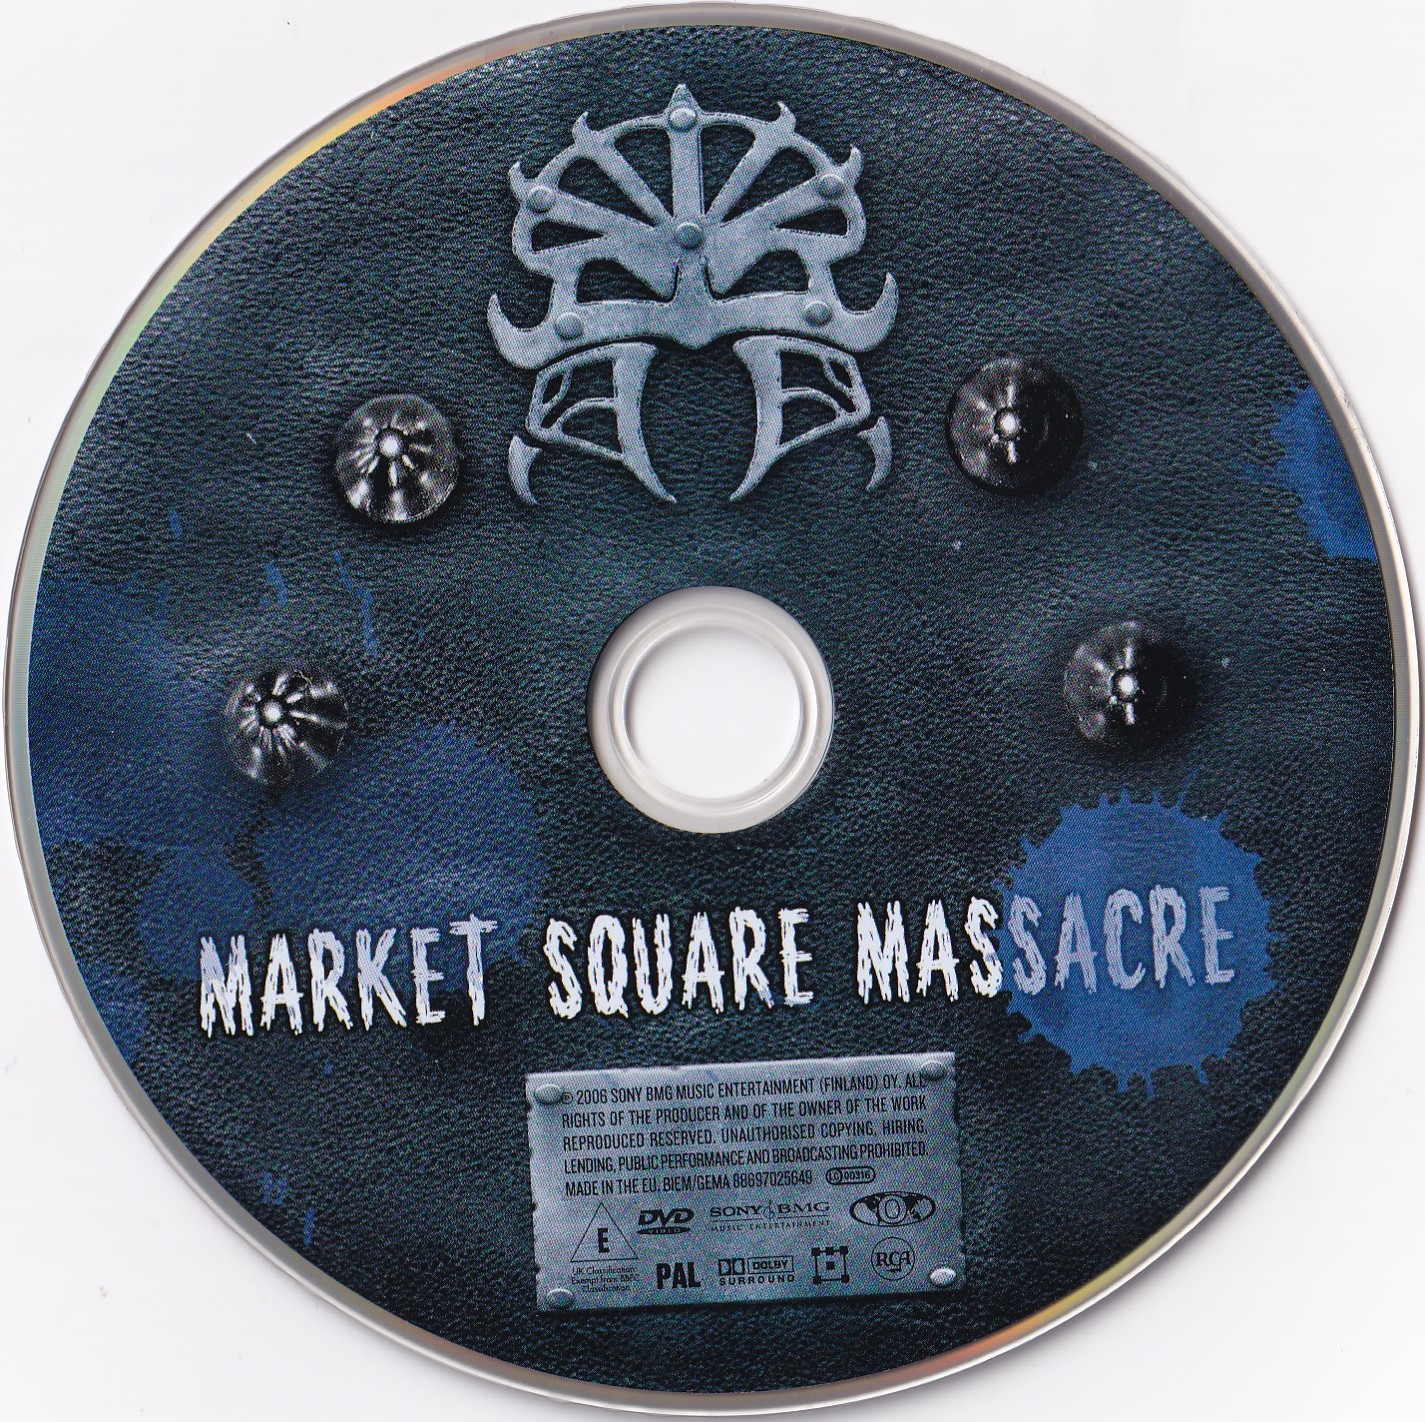 Market Square Massacre